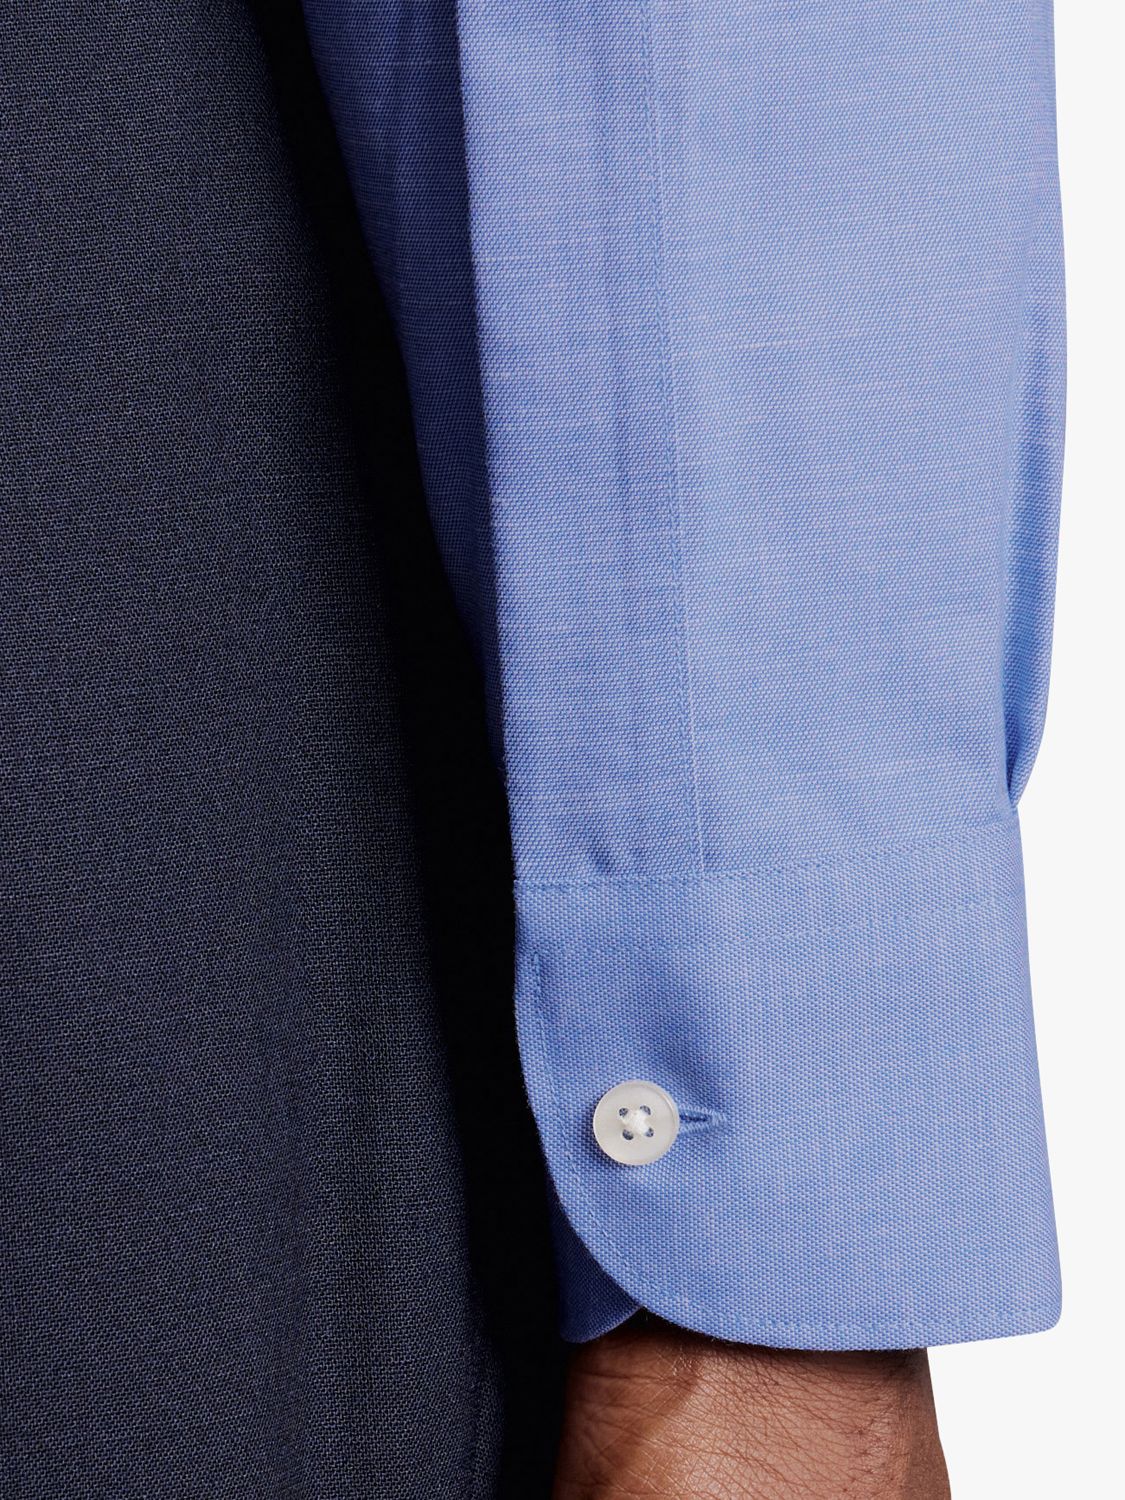 Charles Tyrwhitt Non-Iron Linen Blend Slim Fit Shirt, Cobalt Blue, 14.5